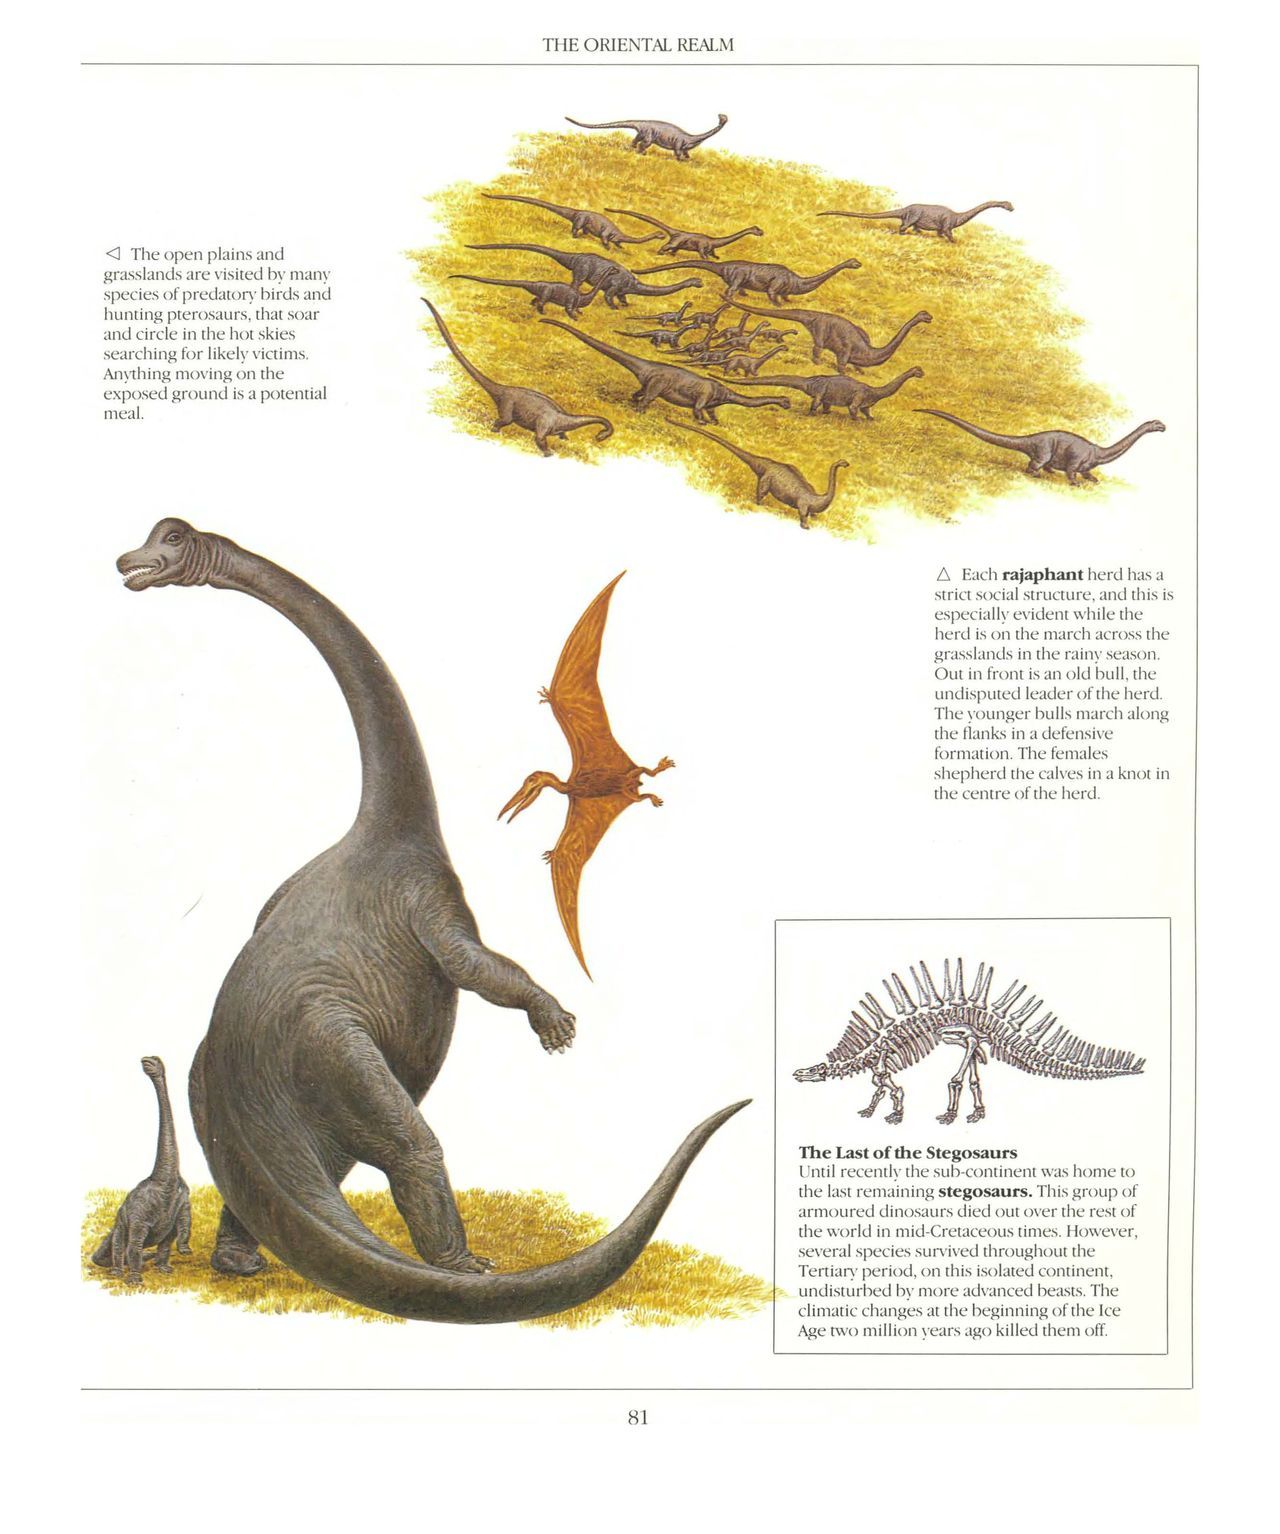 [Dougal Dixon] The New Dinosaurs: An Alternative Evolution 82